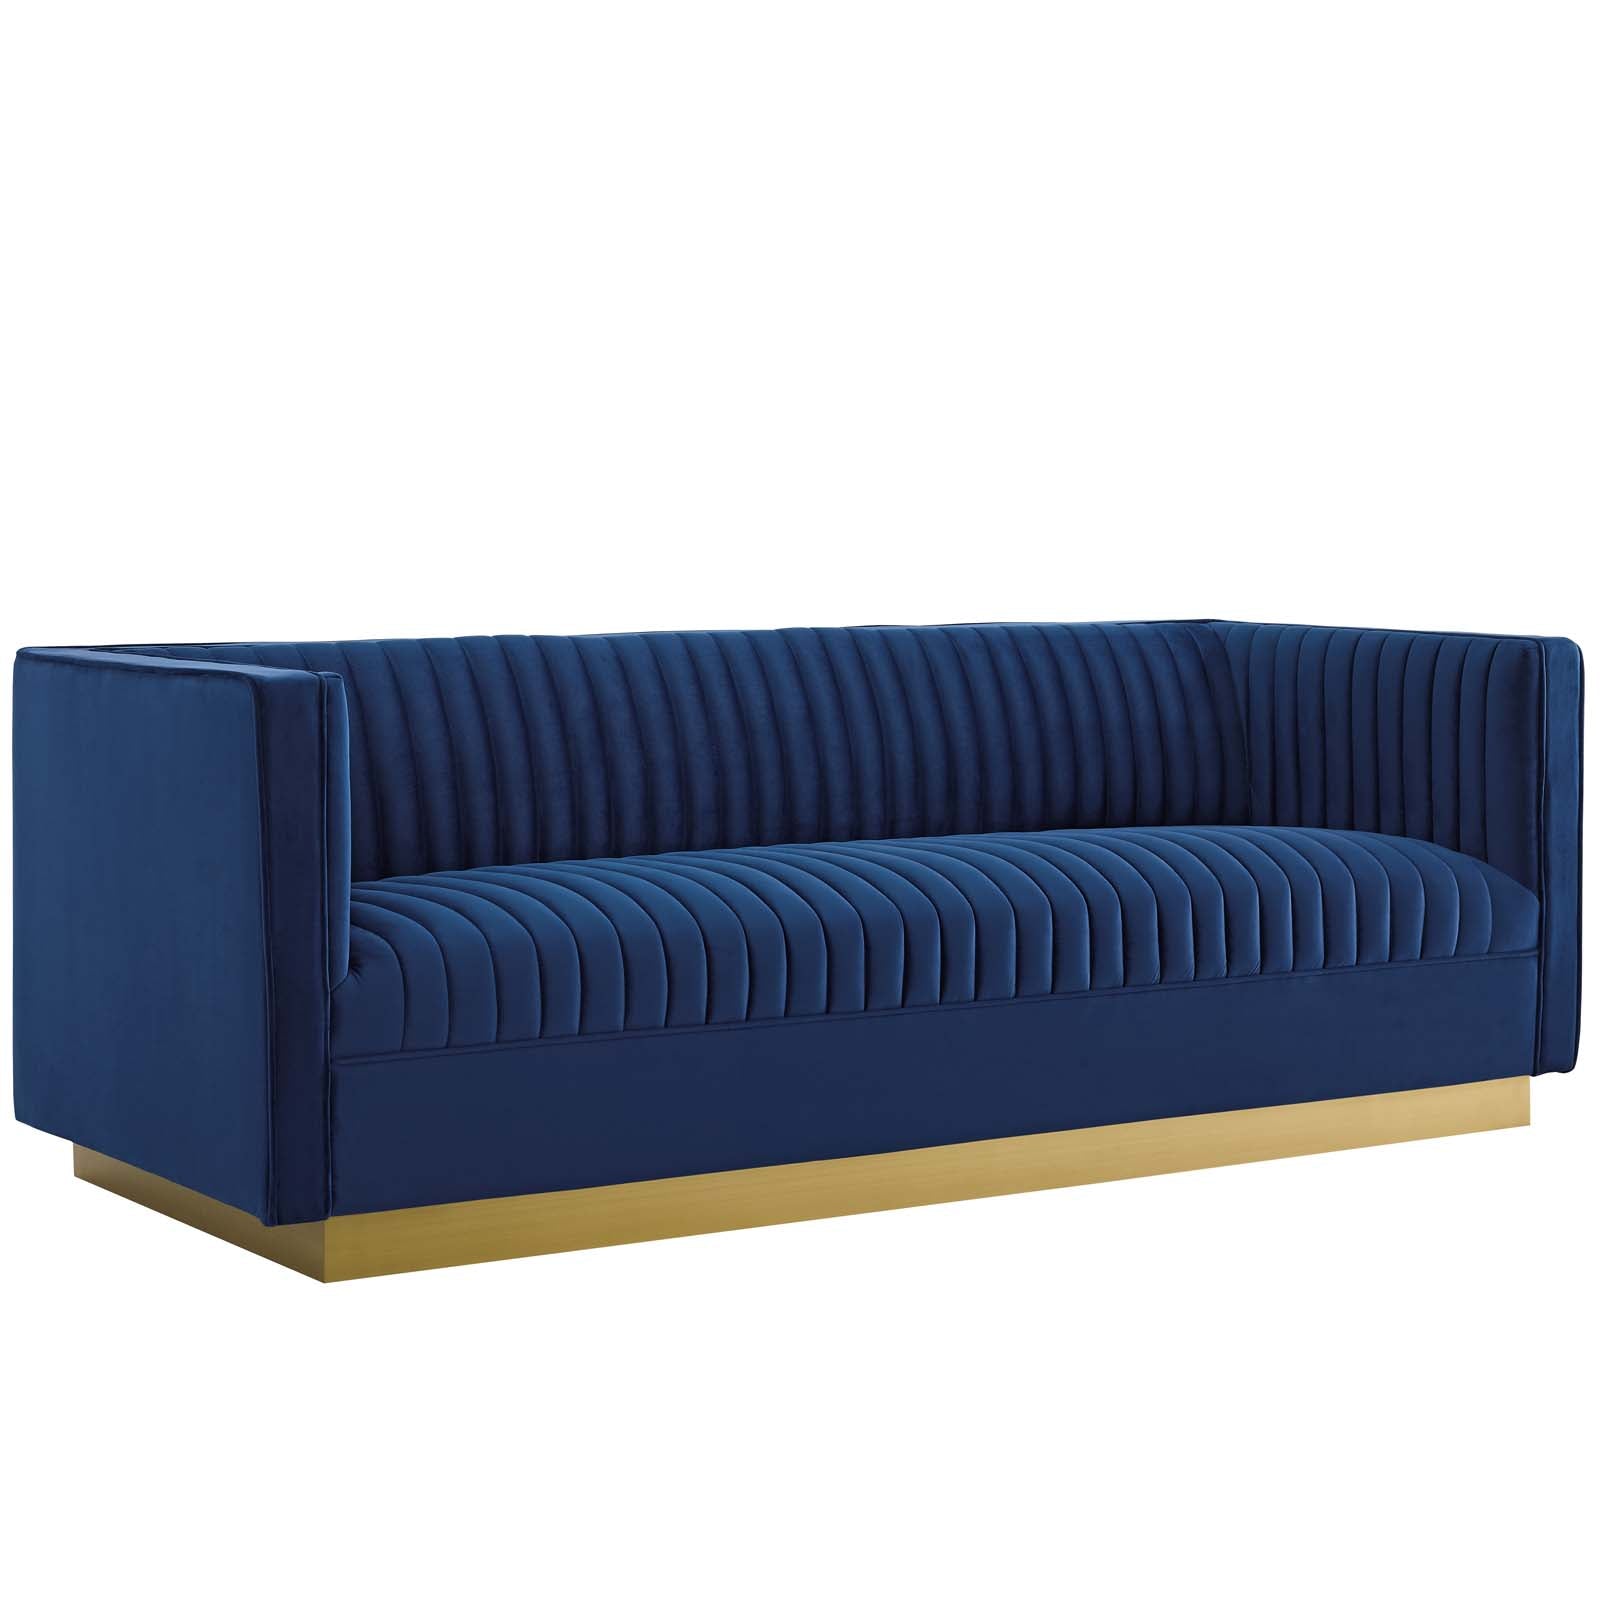 Modway Living Room Sets - Sanguine Vertical Channel Tufted Upholstered Performance Velvet Sofa and Armchair Set Navy